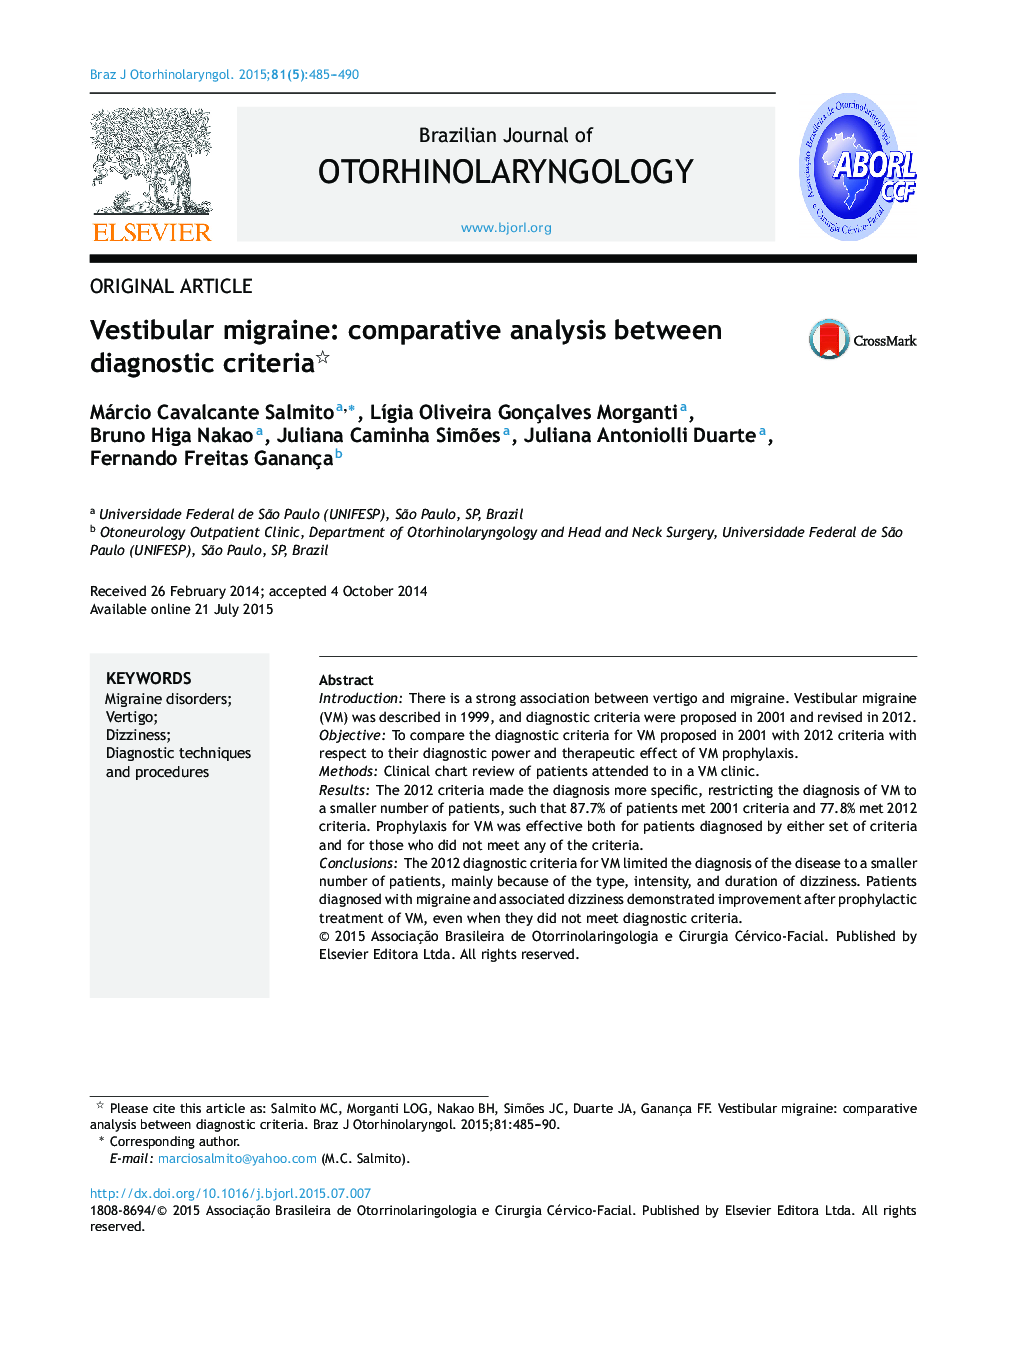 Vestibular migraine: comparative analysis between diagnostic criteria 